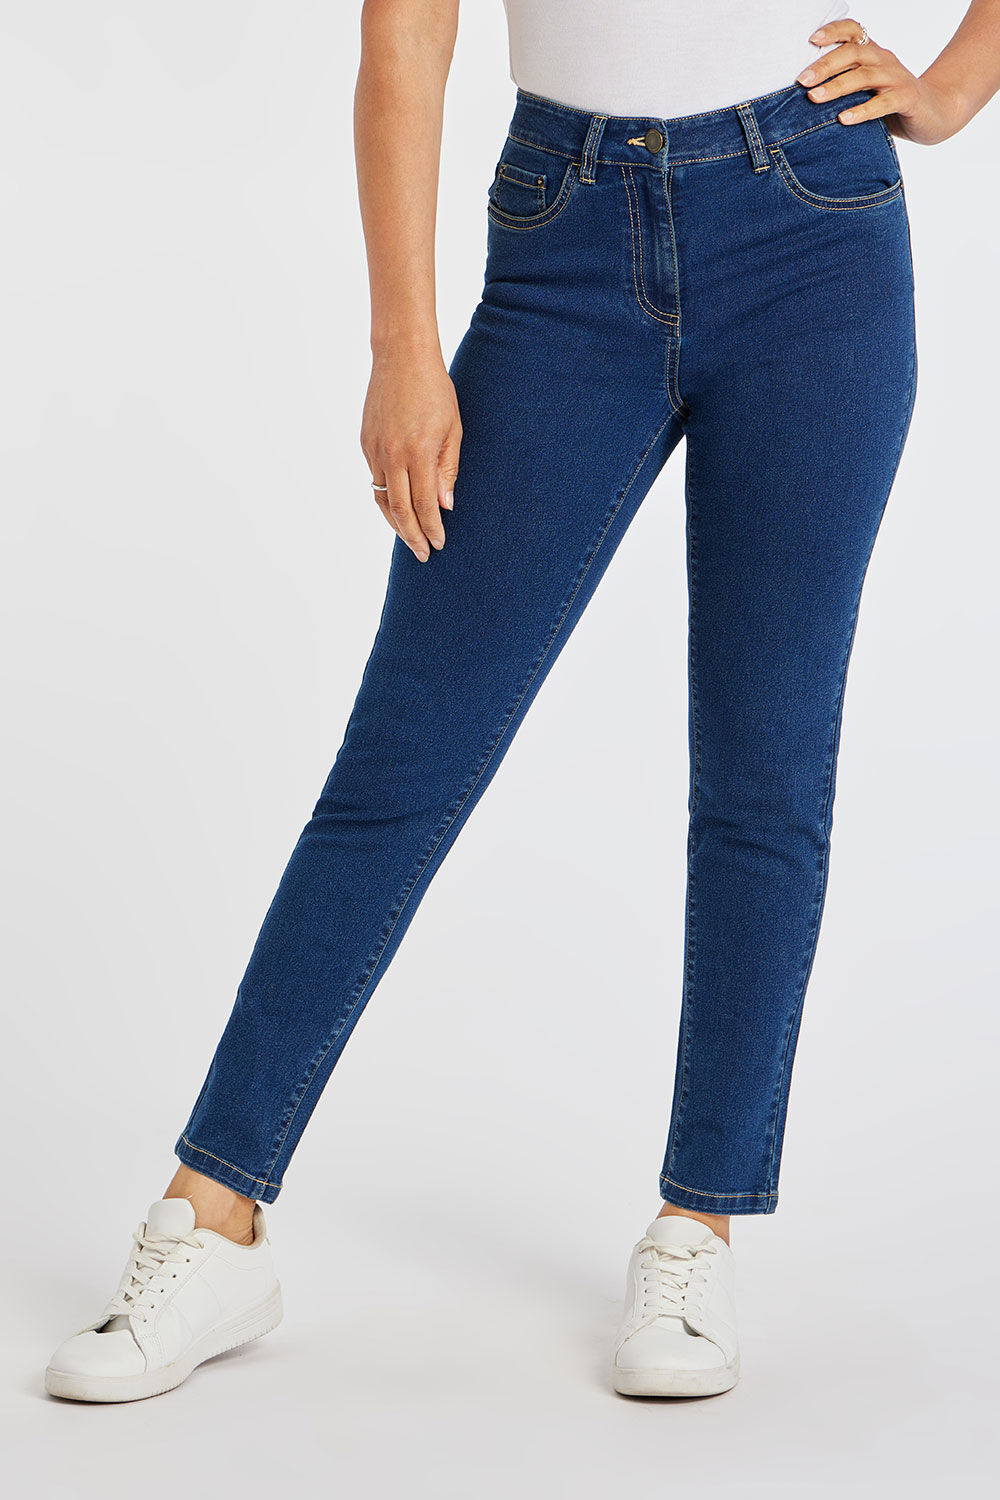 Bonmarche Denim The Susie Slim Leg Jeans, Size: 24